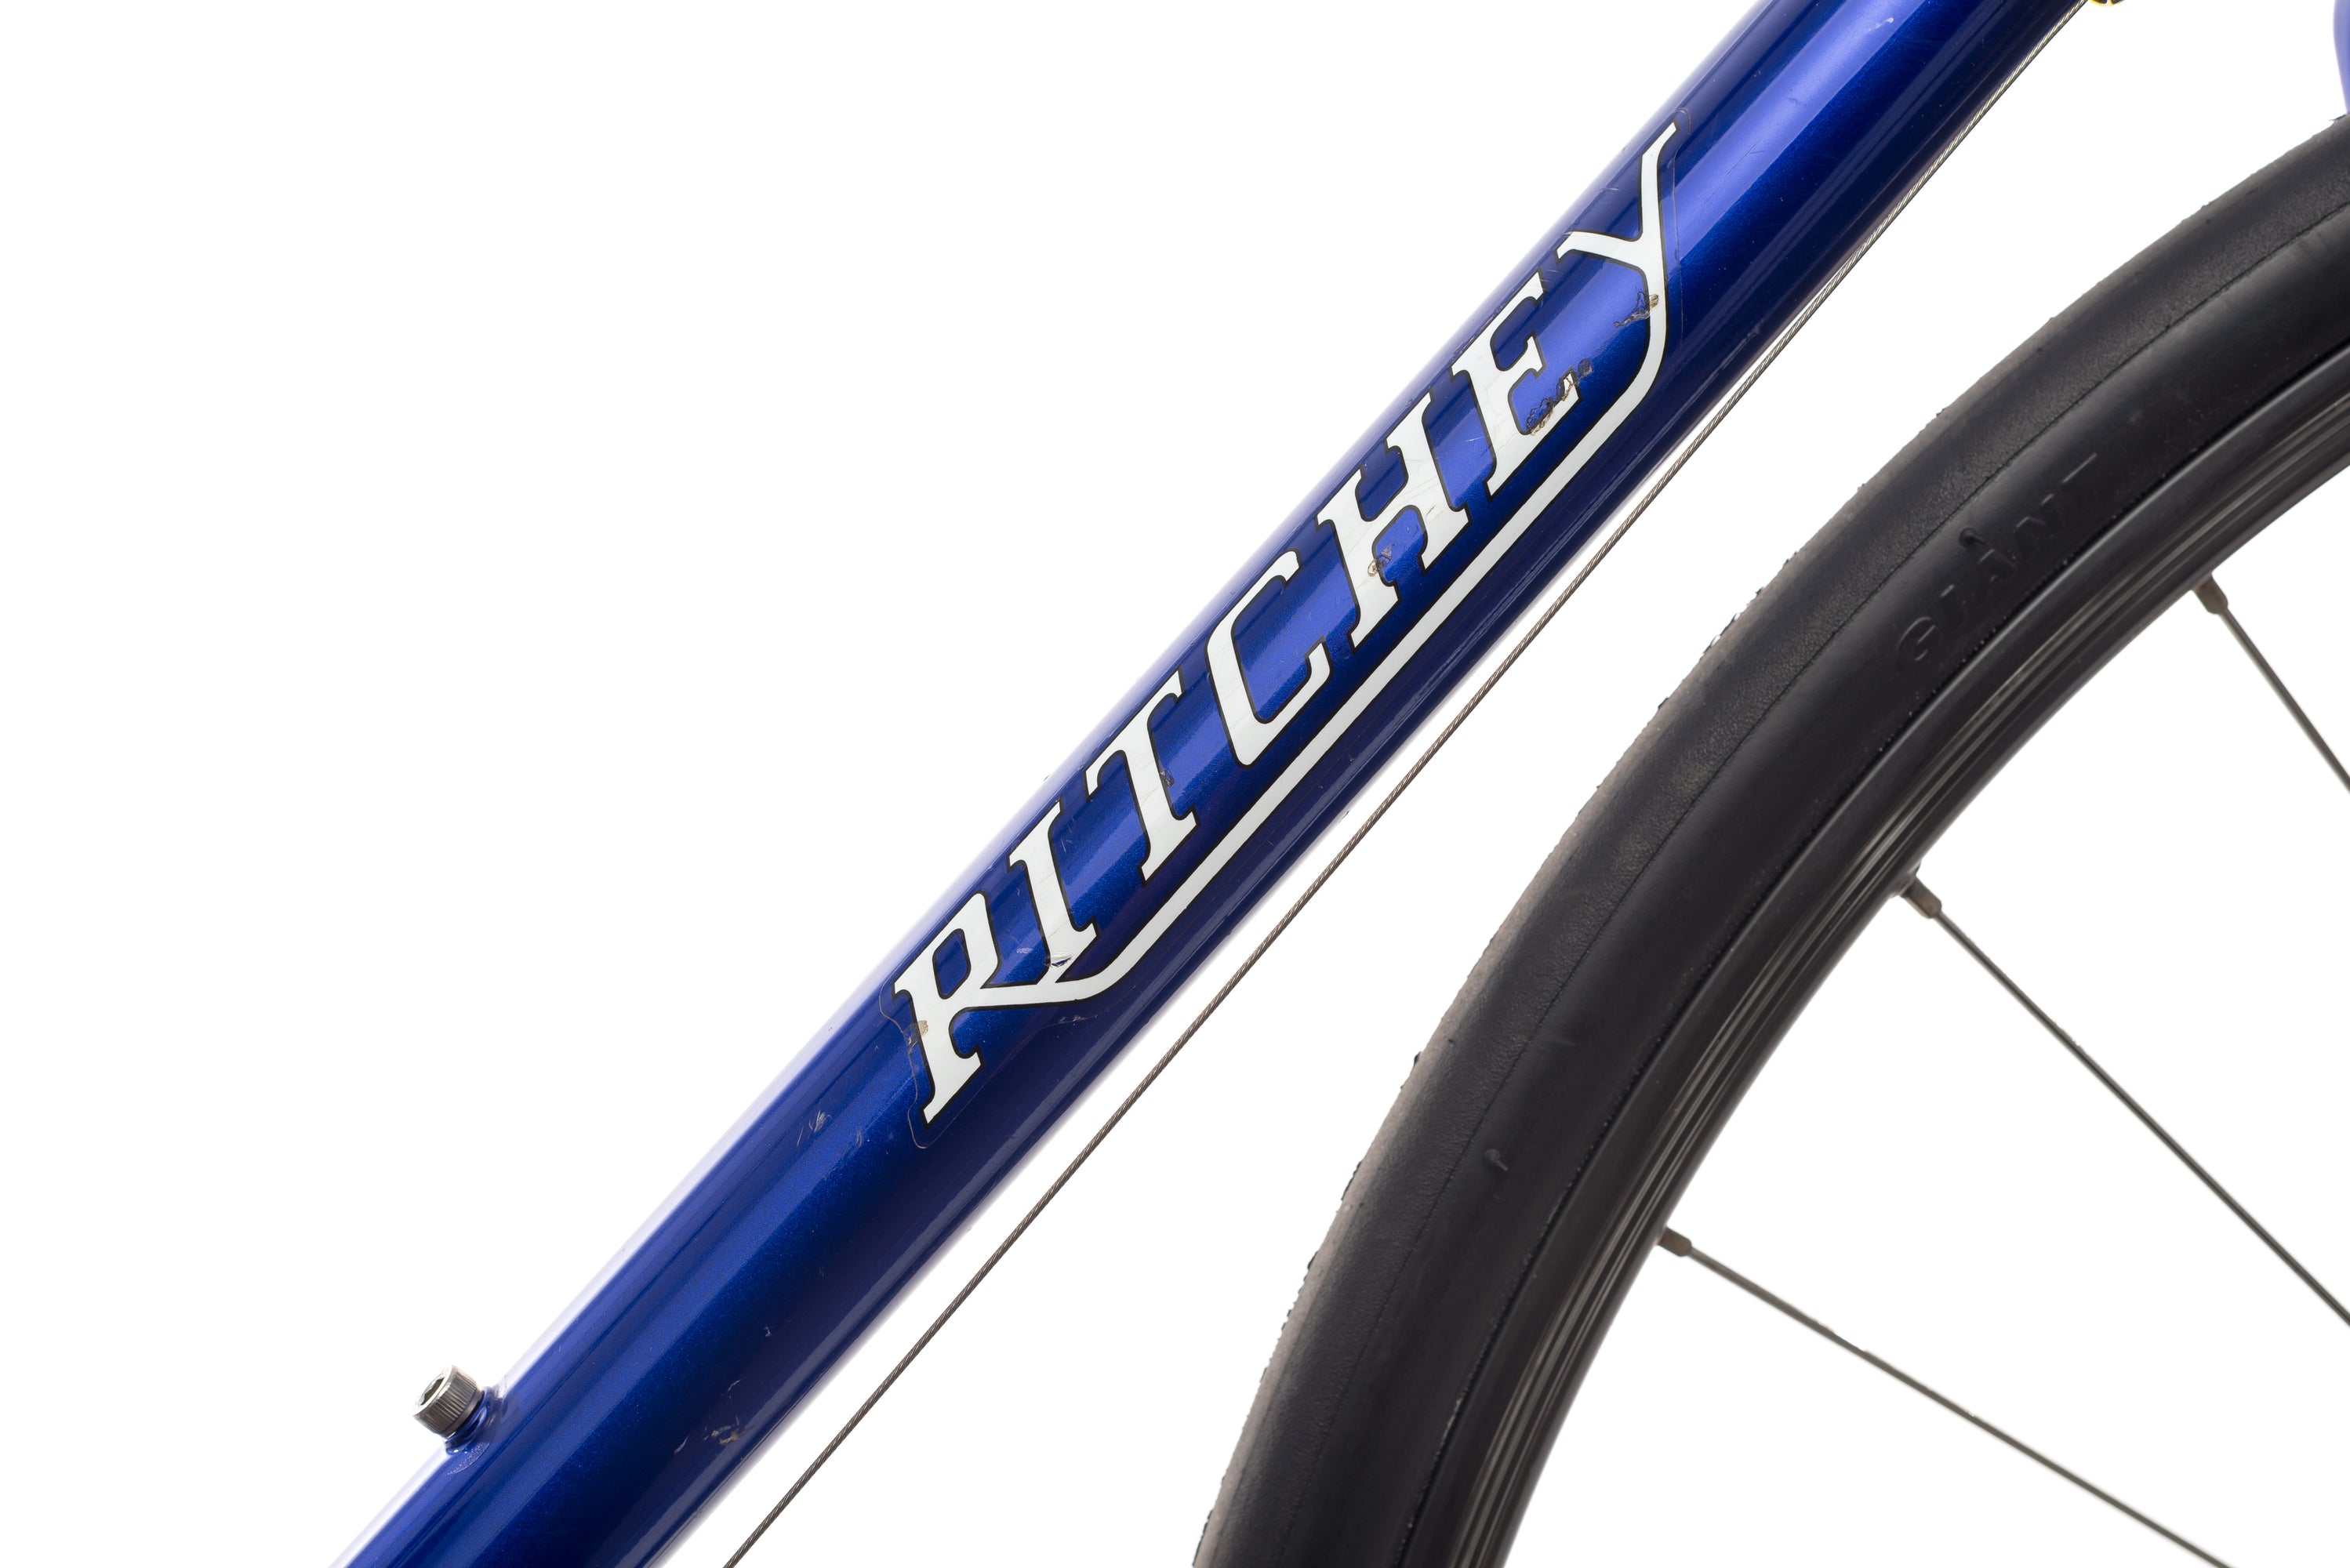 Ritchey Road Logic 58cm Bike - 1997 detail 1